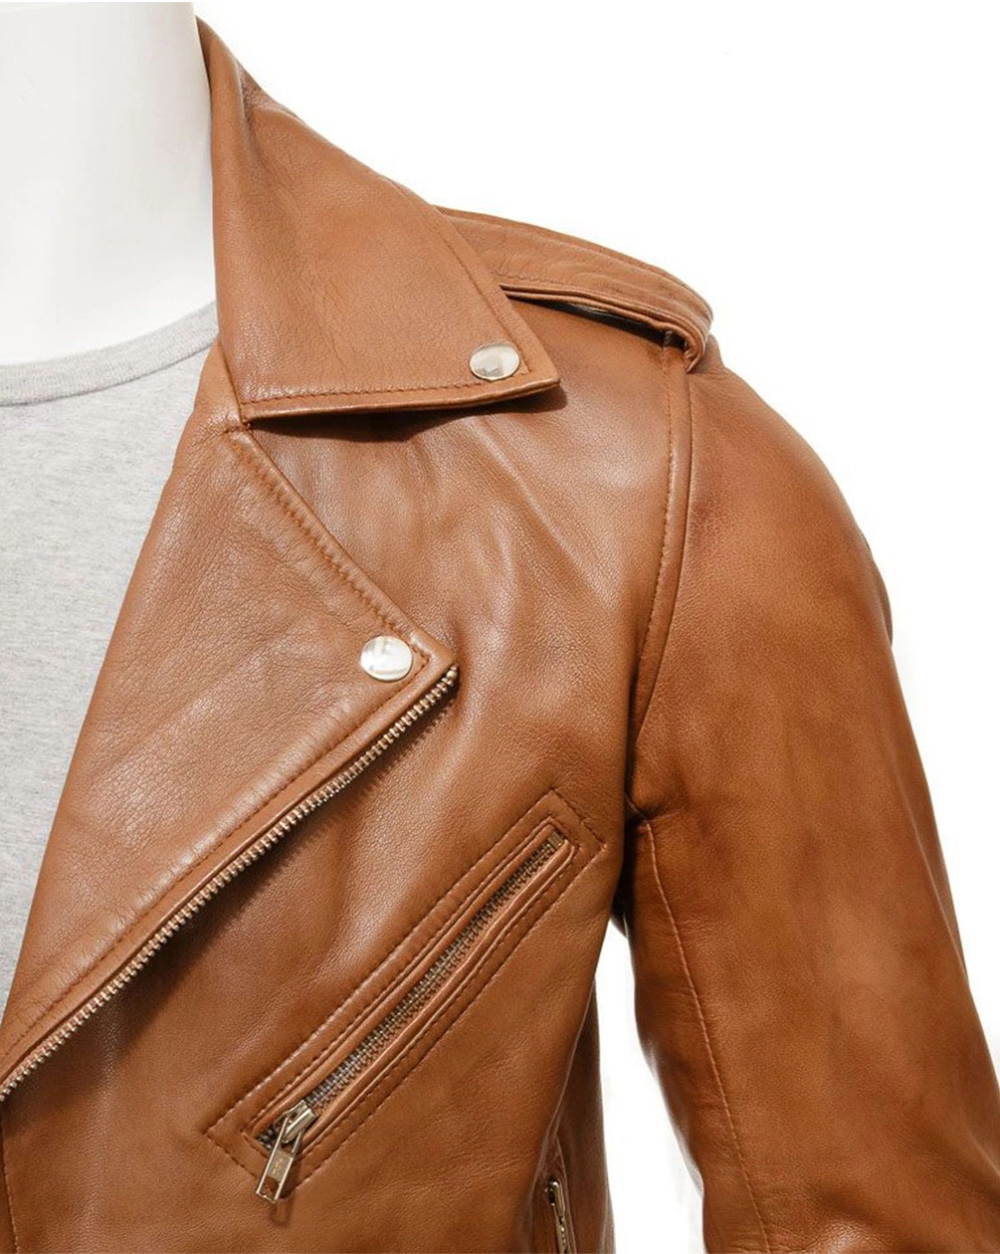 Mens Classic Brando Style Tan Biker Leather Jacket by SCIN